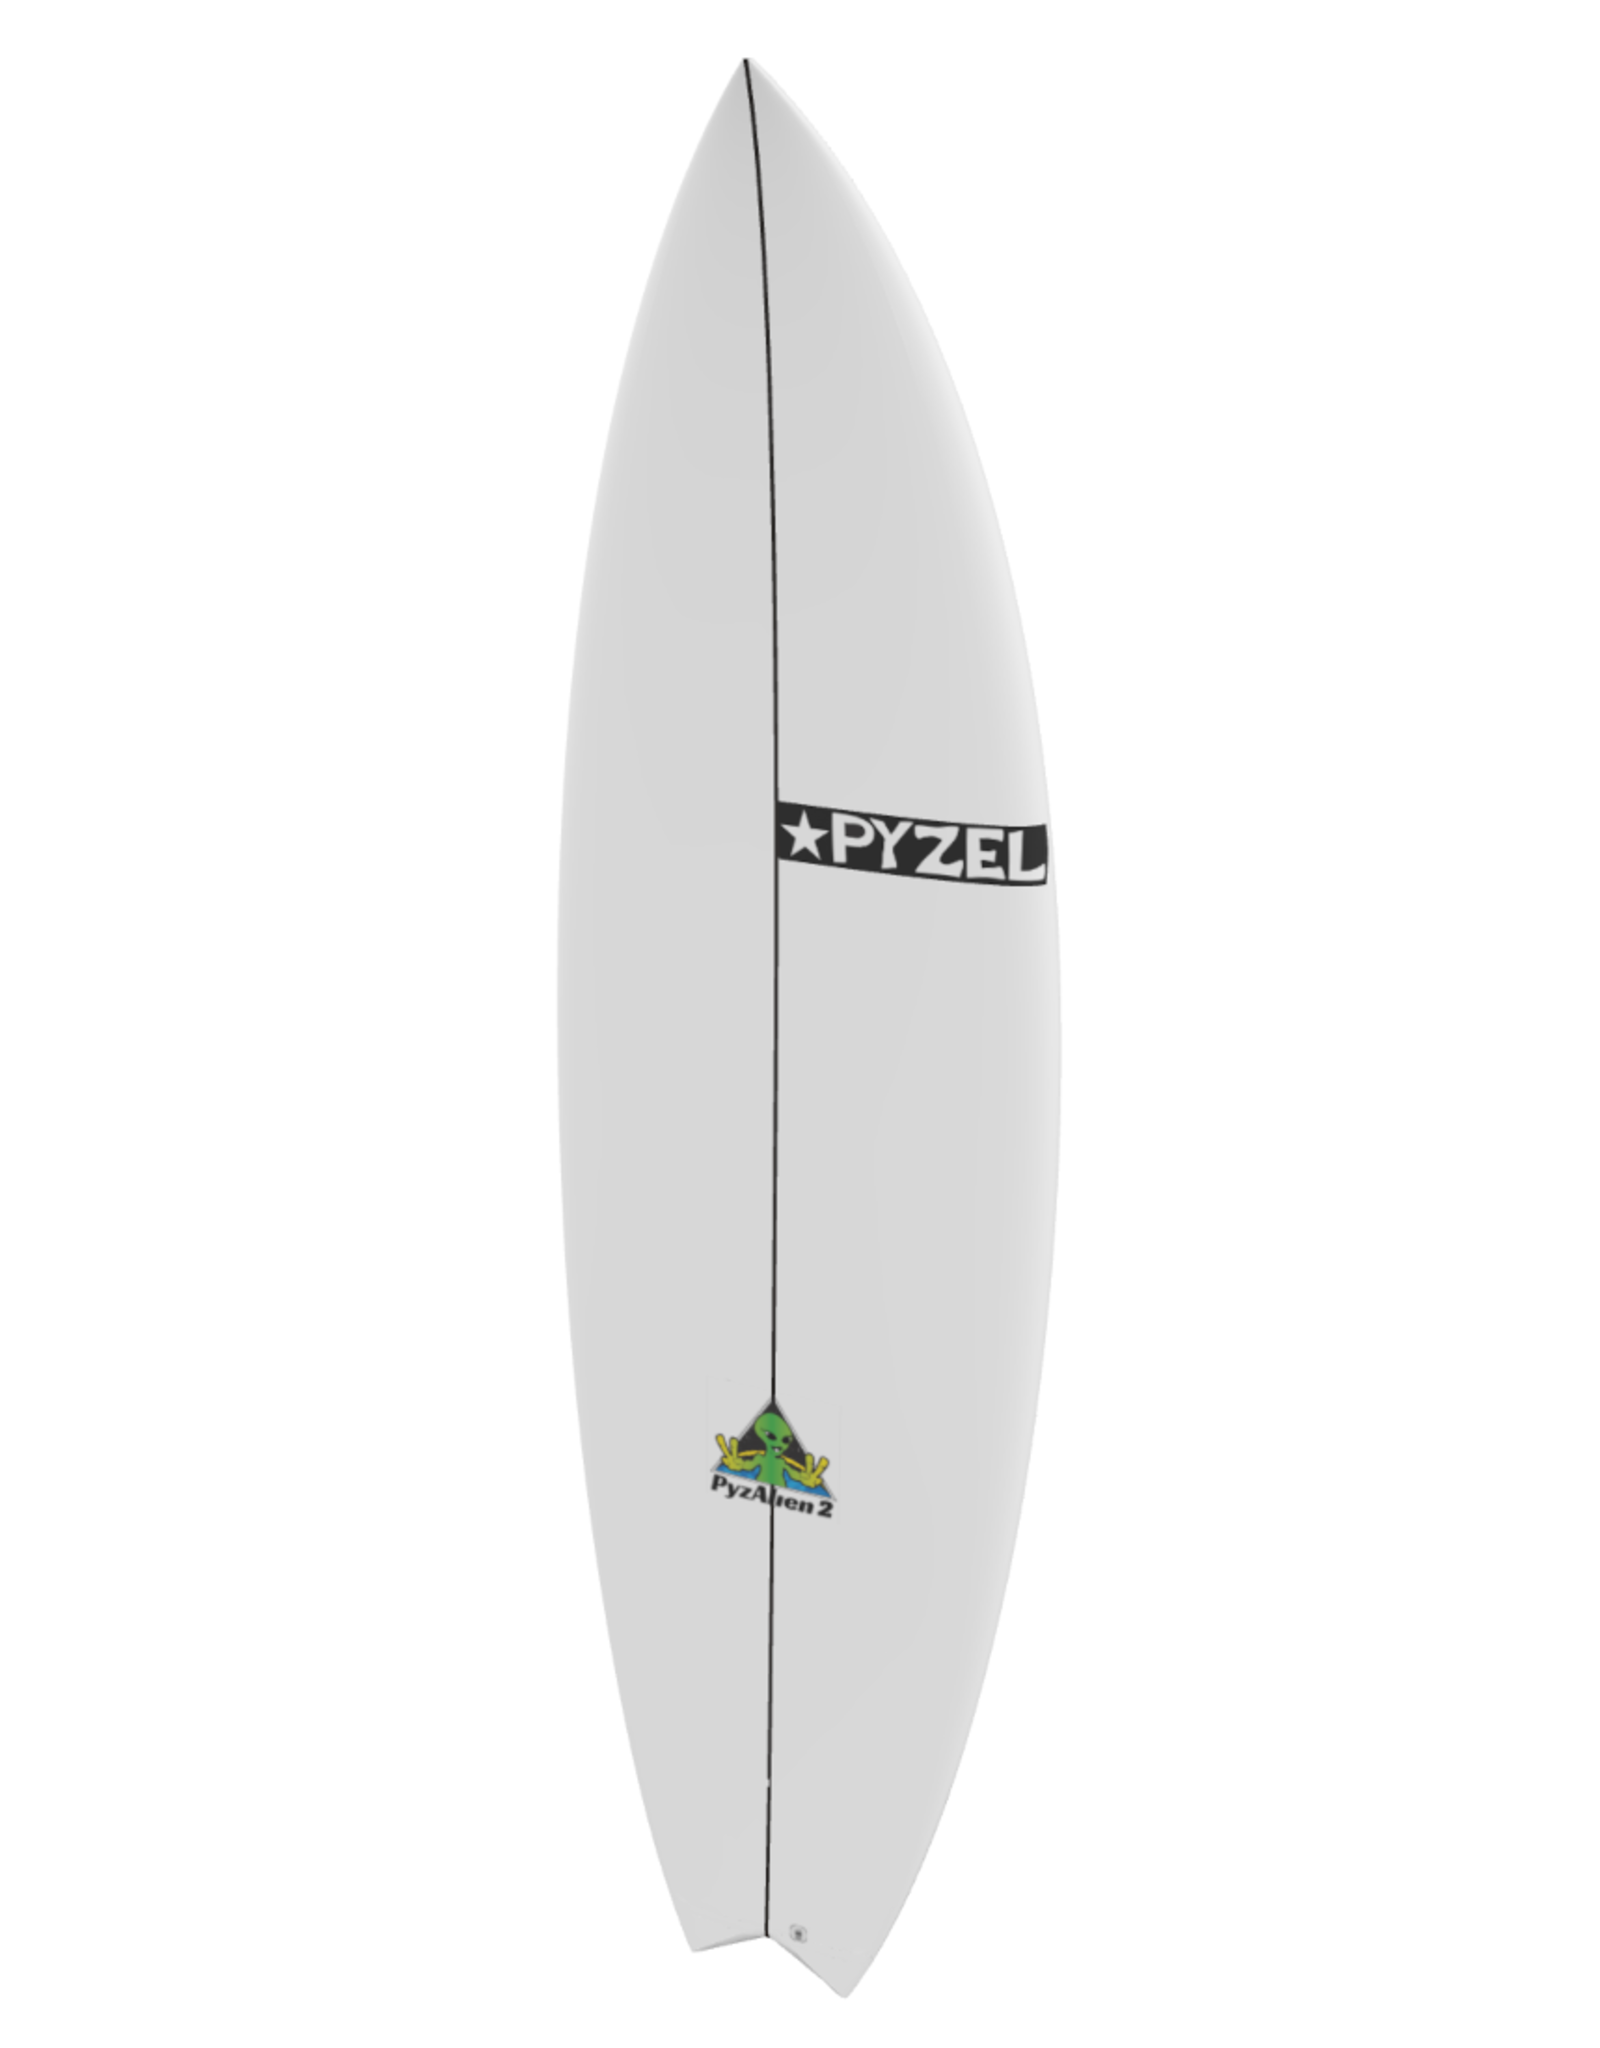 Pyzel Surfboards Pyzel 6'0" Pyzalien 2 Futures